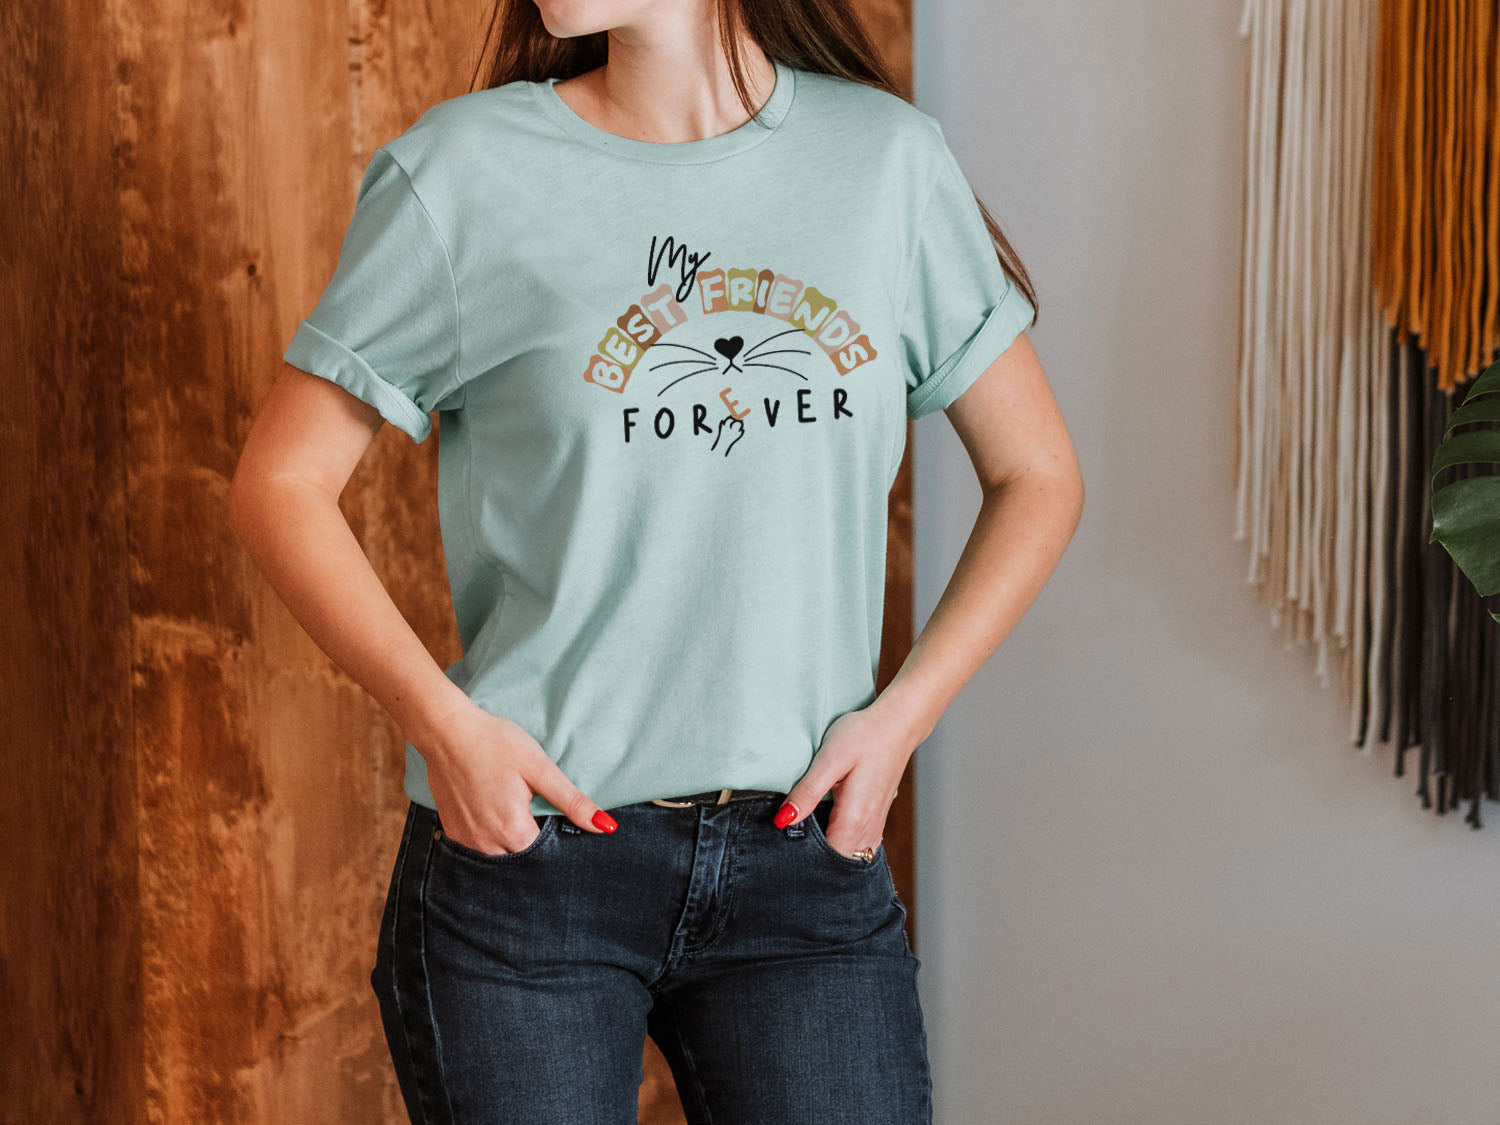 My Best Friends Forever Kitty Ver. T-shirt - Fun Pet Love Design Printed Tee Shirt